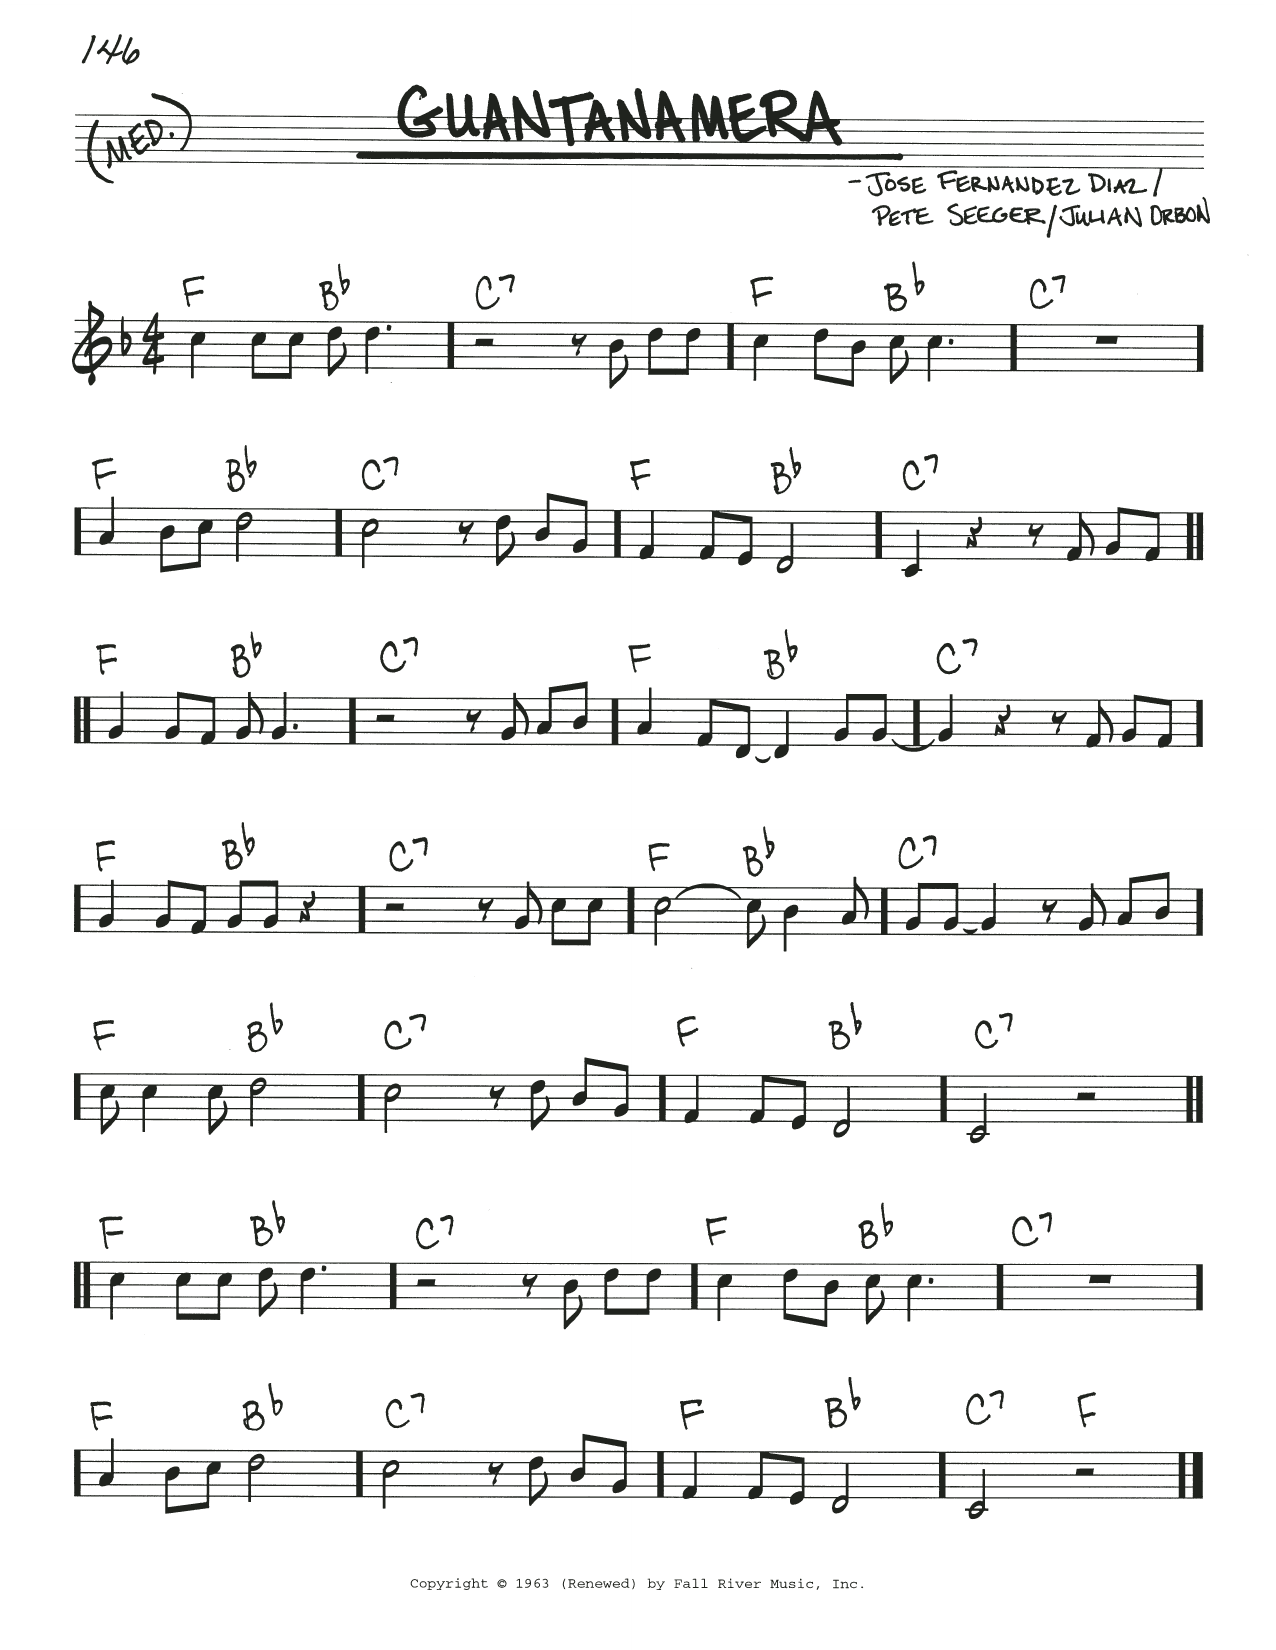 Jose Fernandez Diaz Guantanamera Sheet Music Notes & Chords for Piano, Vocal & Guitar Chords (Right-Hand Melody) - Download or Print PDF